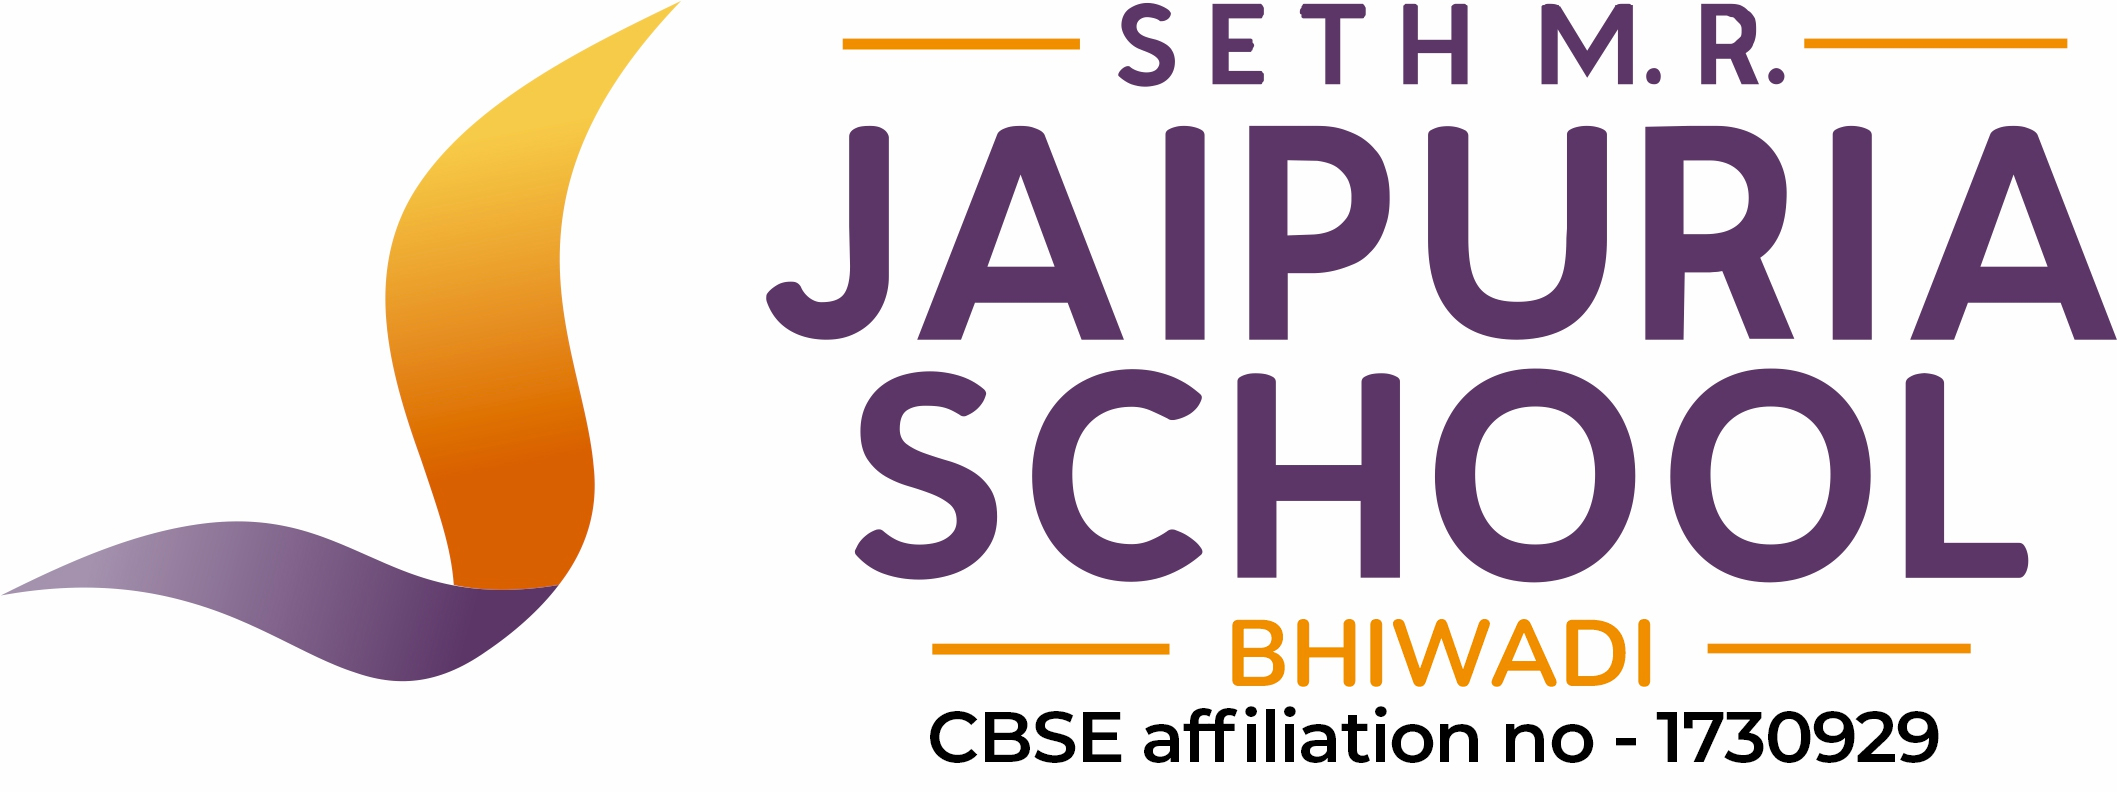 jaipuria-Bhiwadi-logo